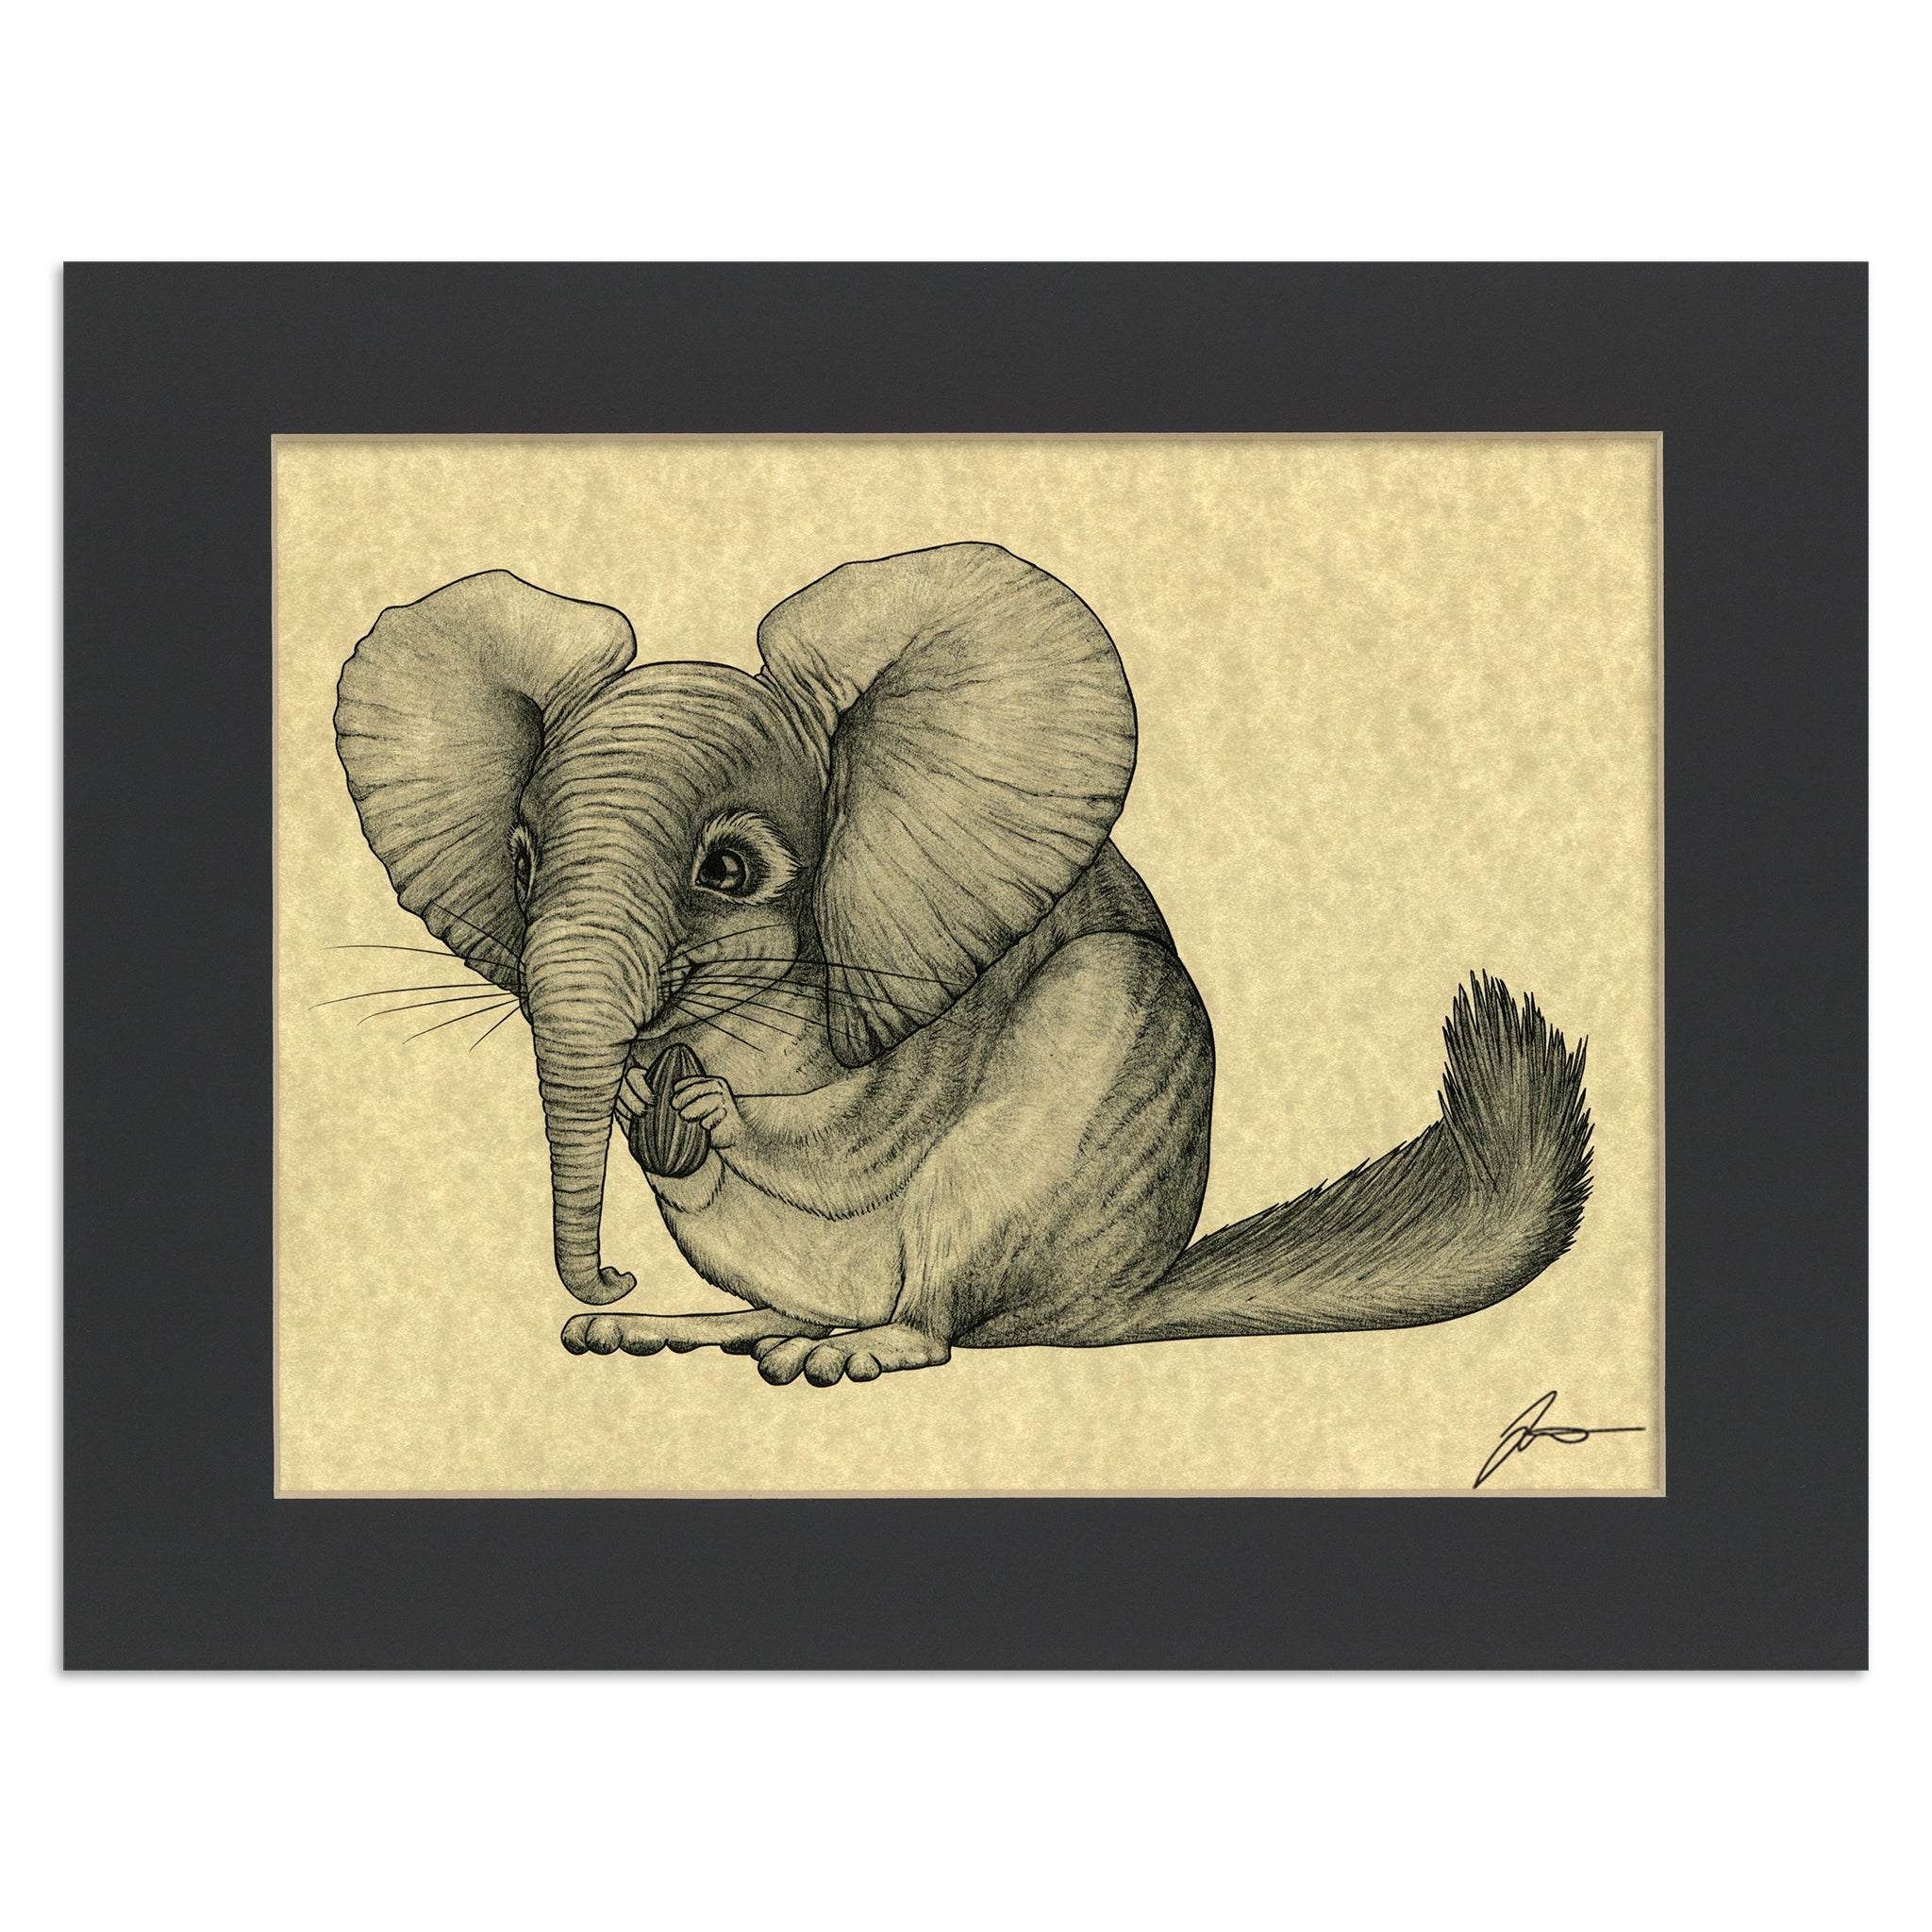 Chinchillaphant | Chinchilla + Elephant Hybrid Animal | 11x14" Parchment Print